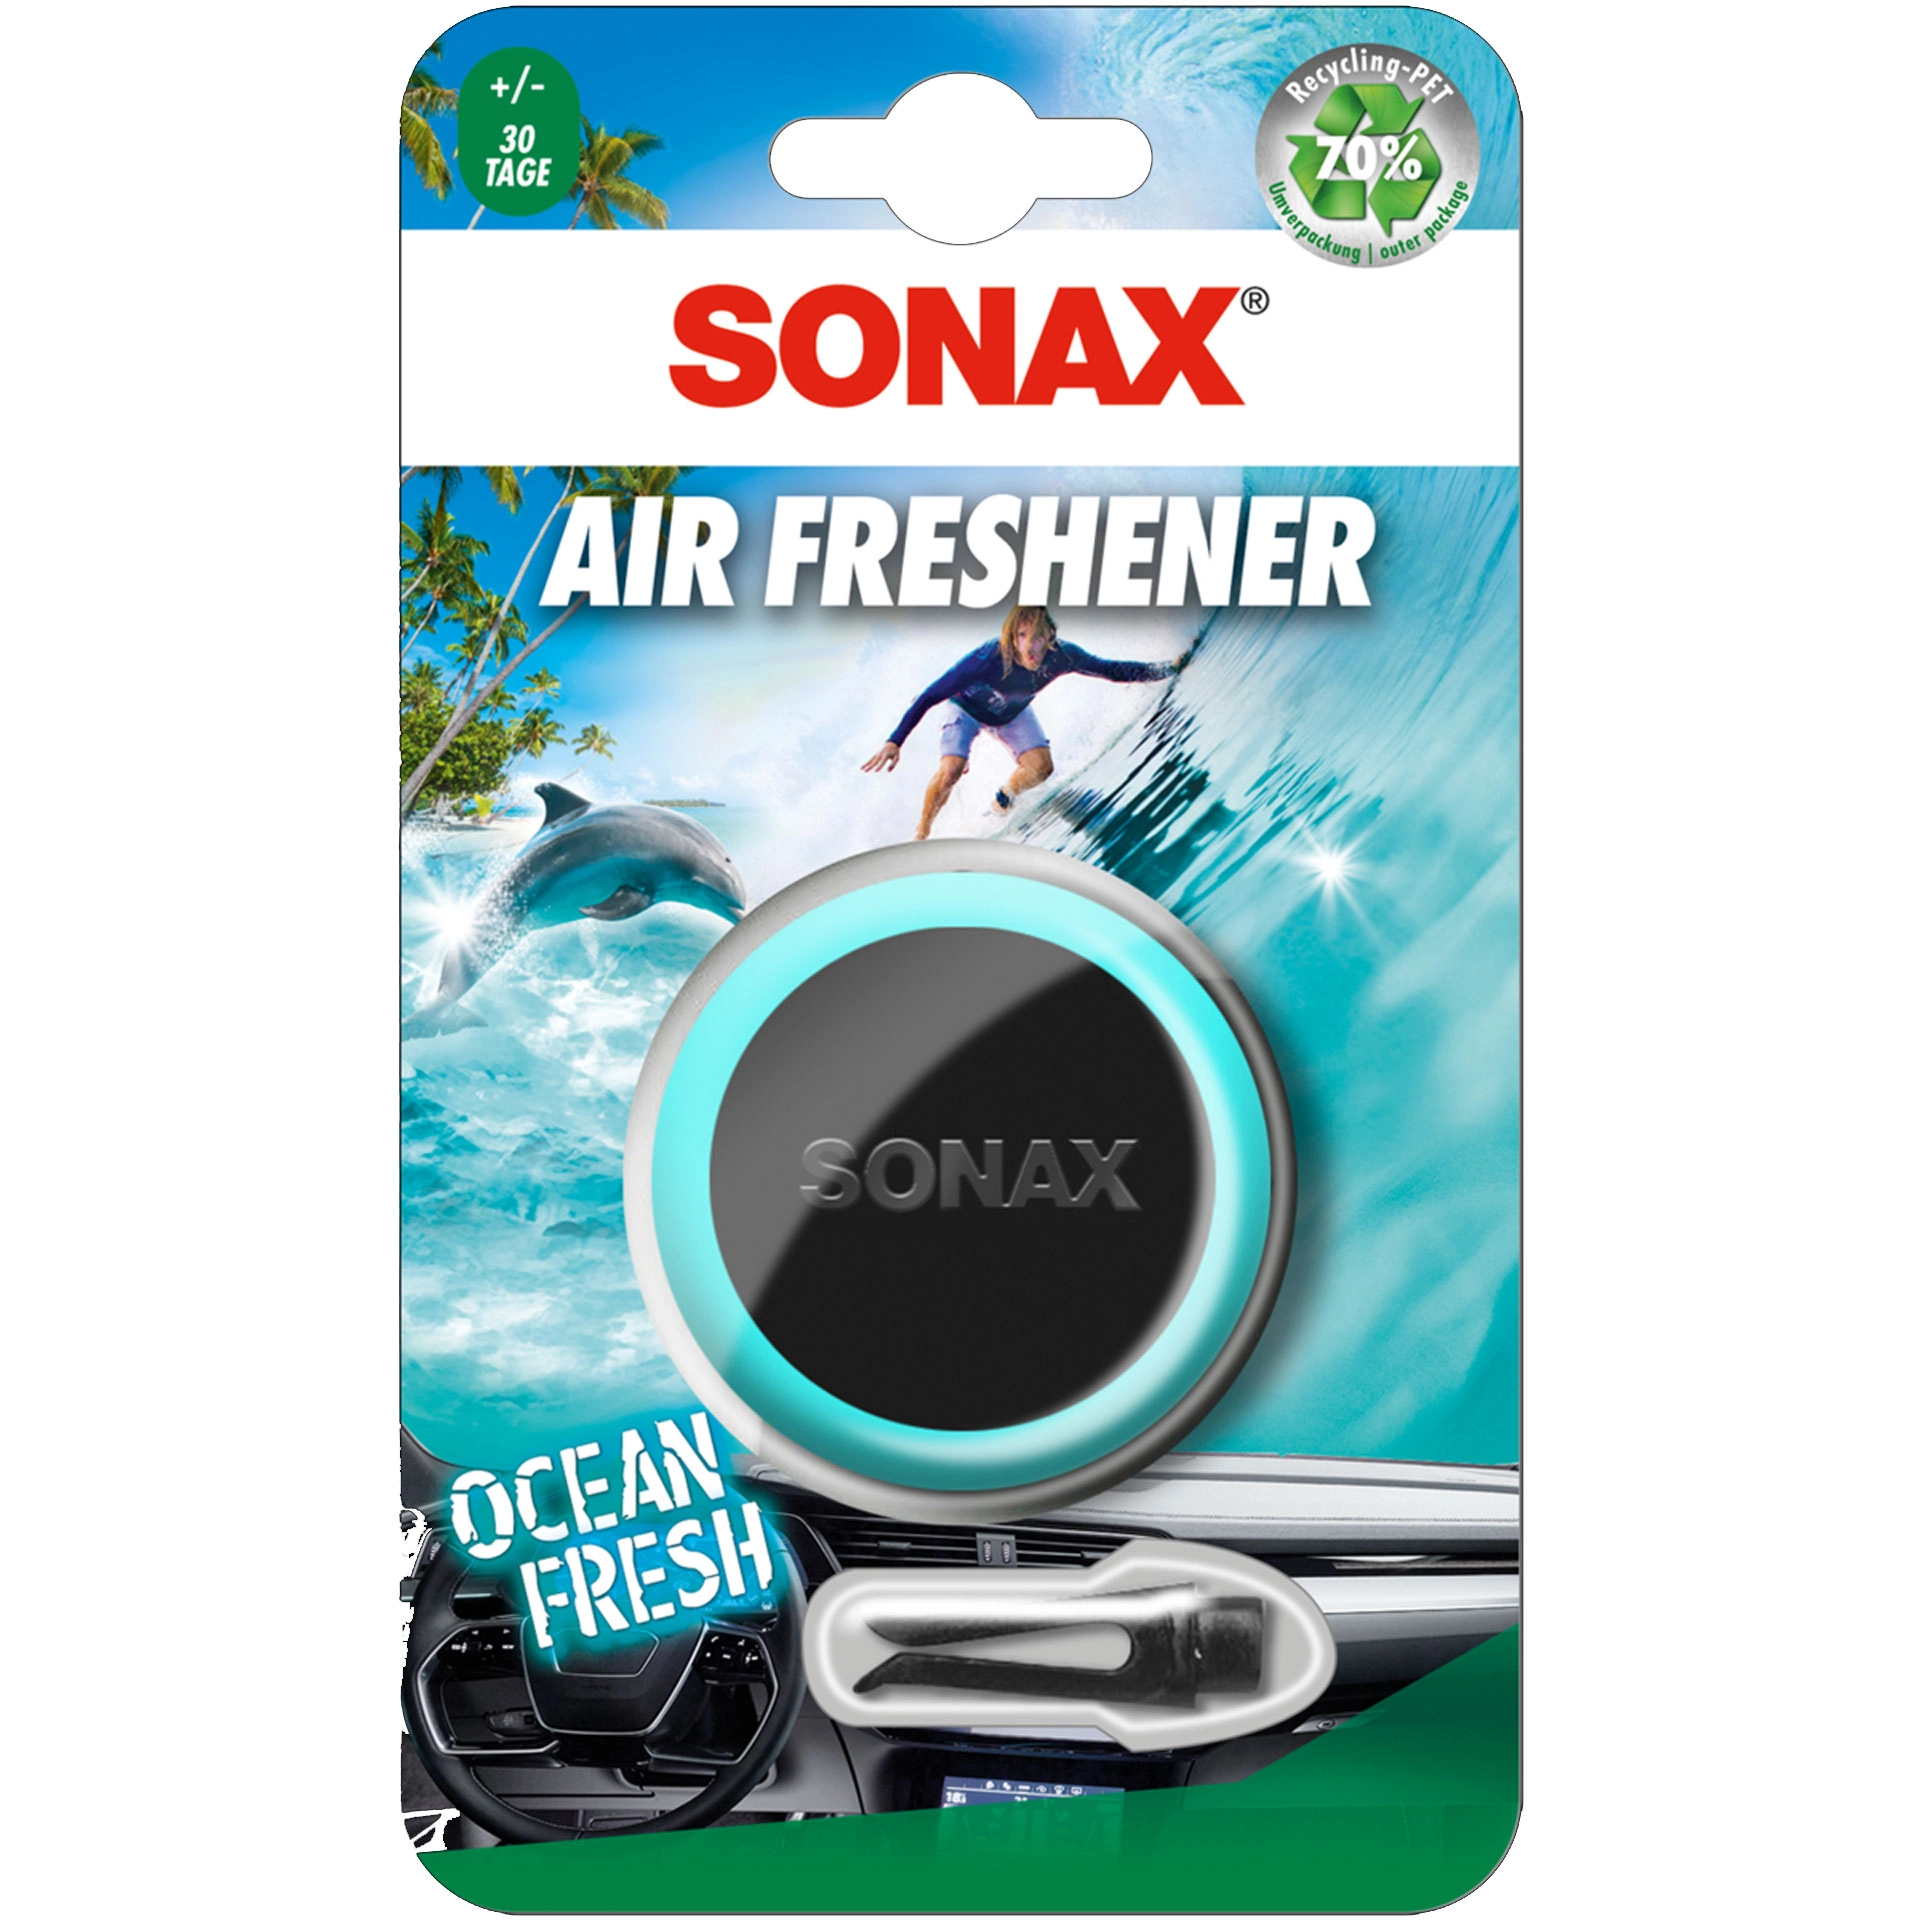 Sonax Air Freshener Ocean-fresh Innenraumduft 03640410